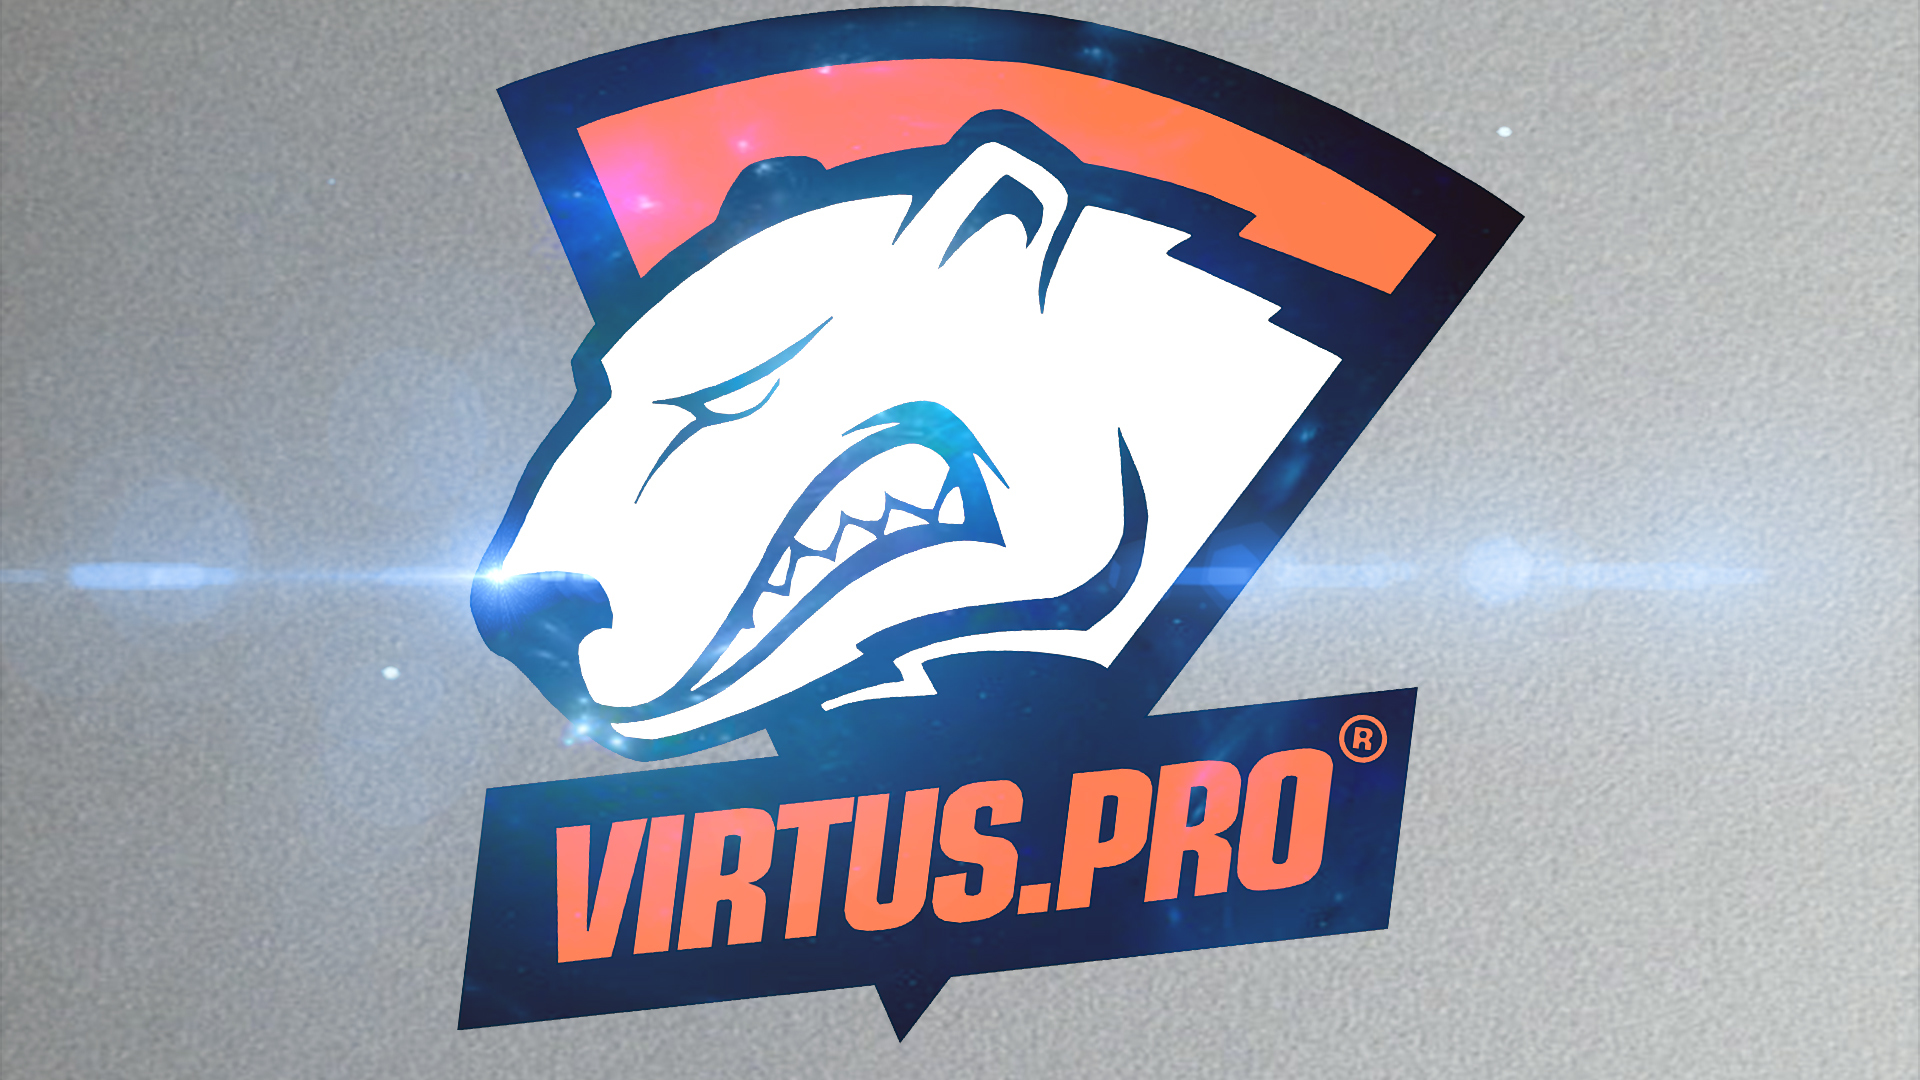 Virtus pro